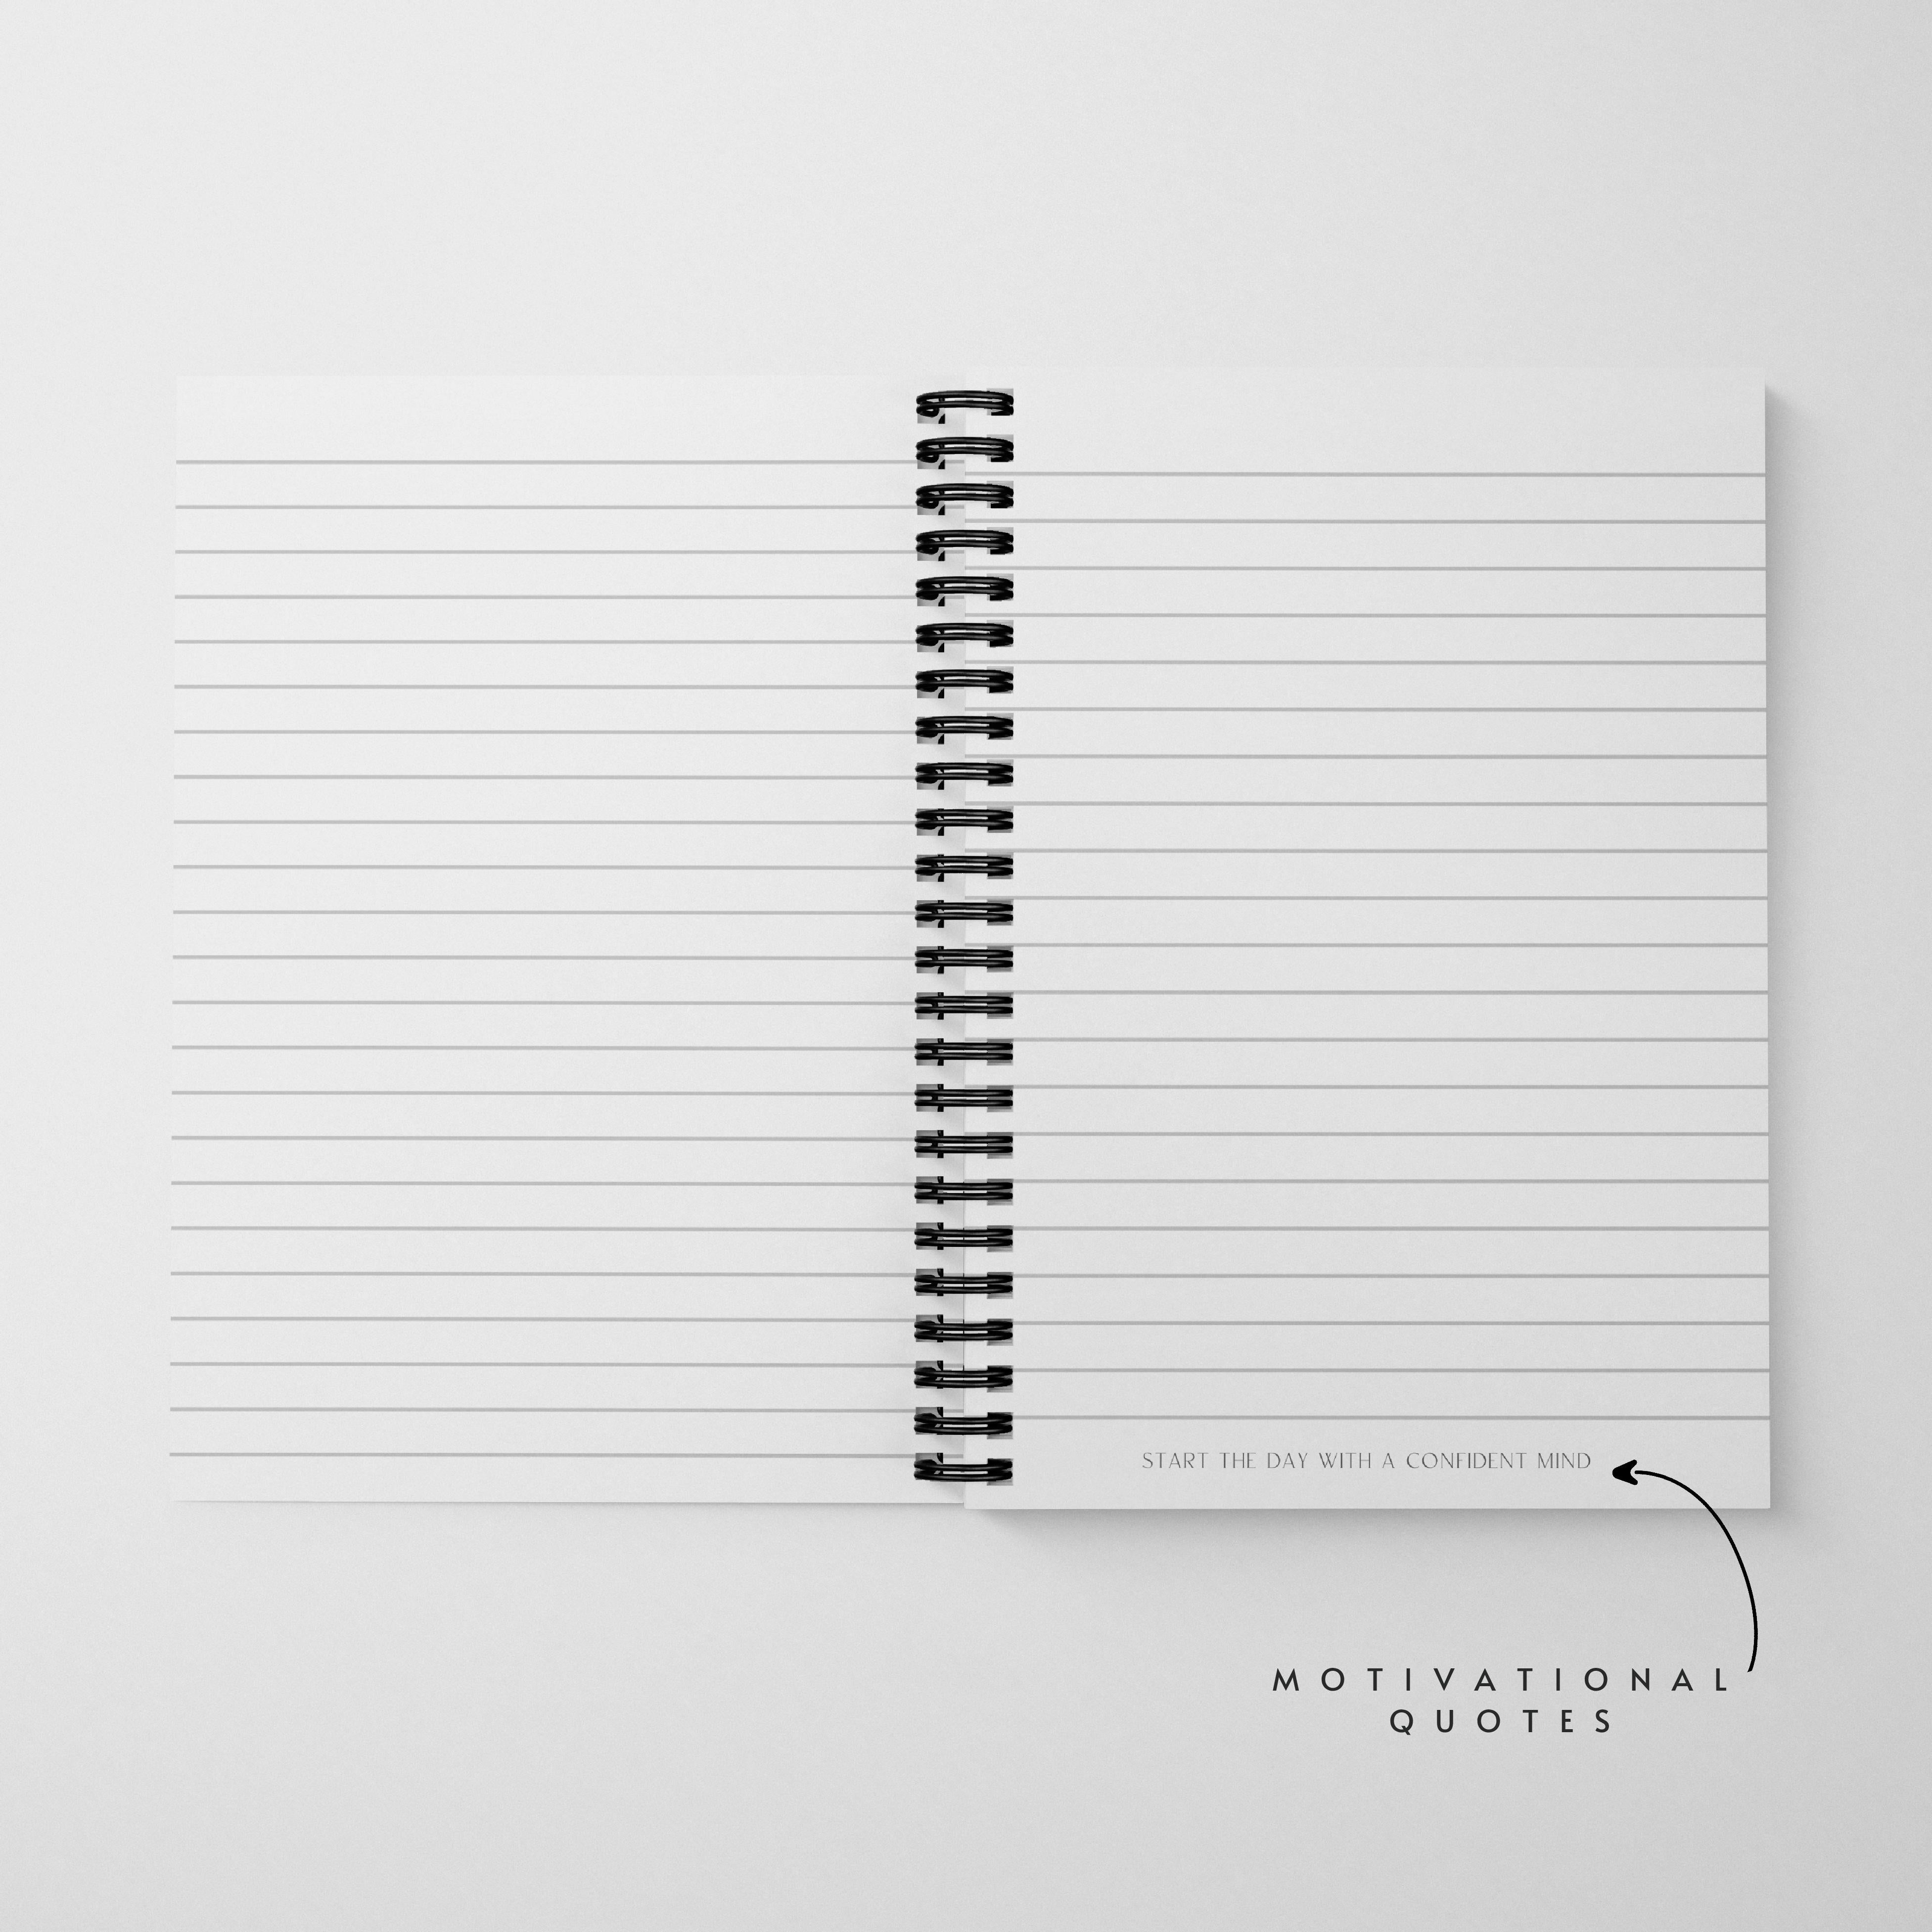 Memo Notebook